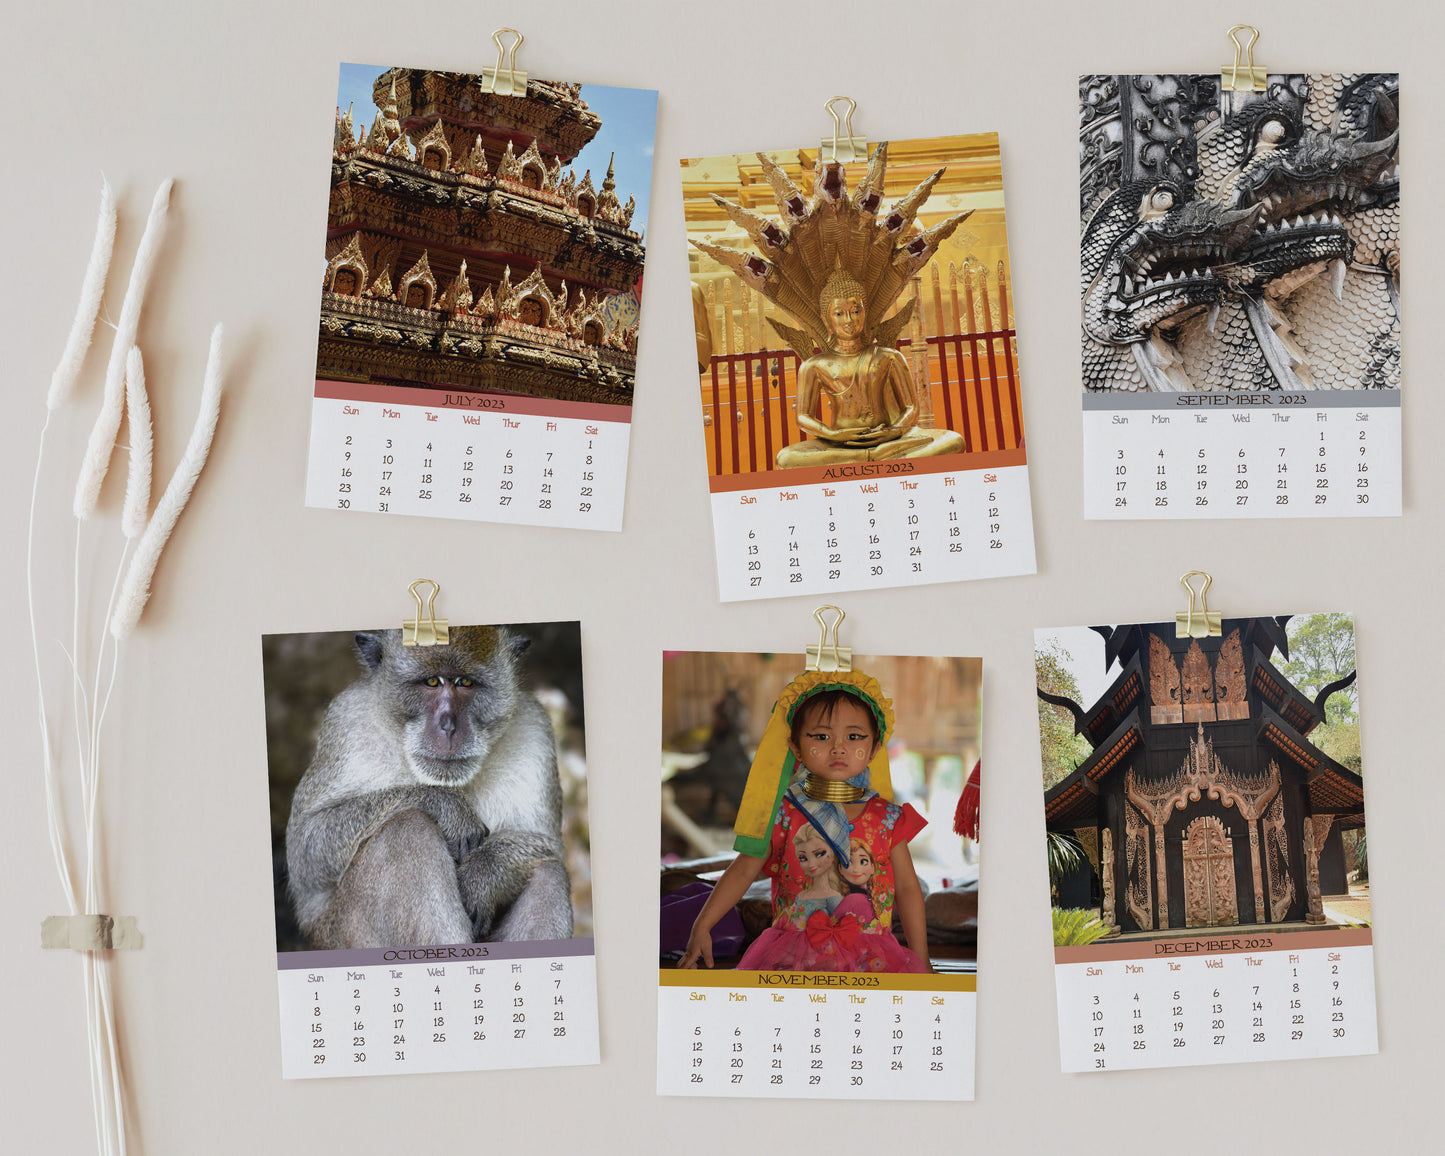 2023 Photo Calendar - Thailand